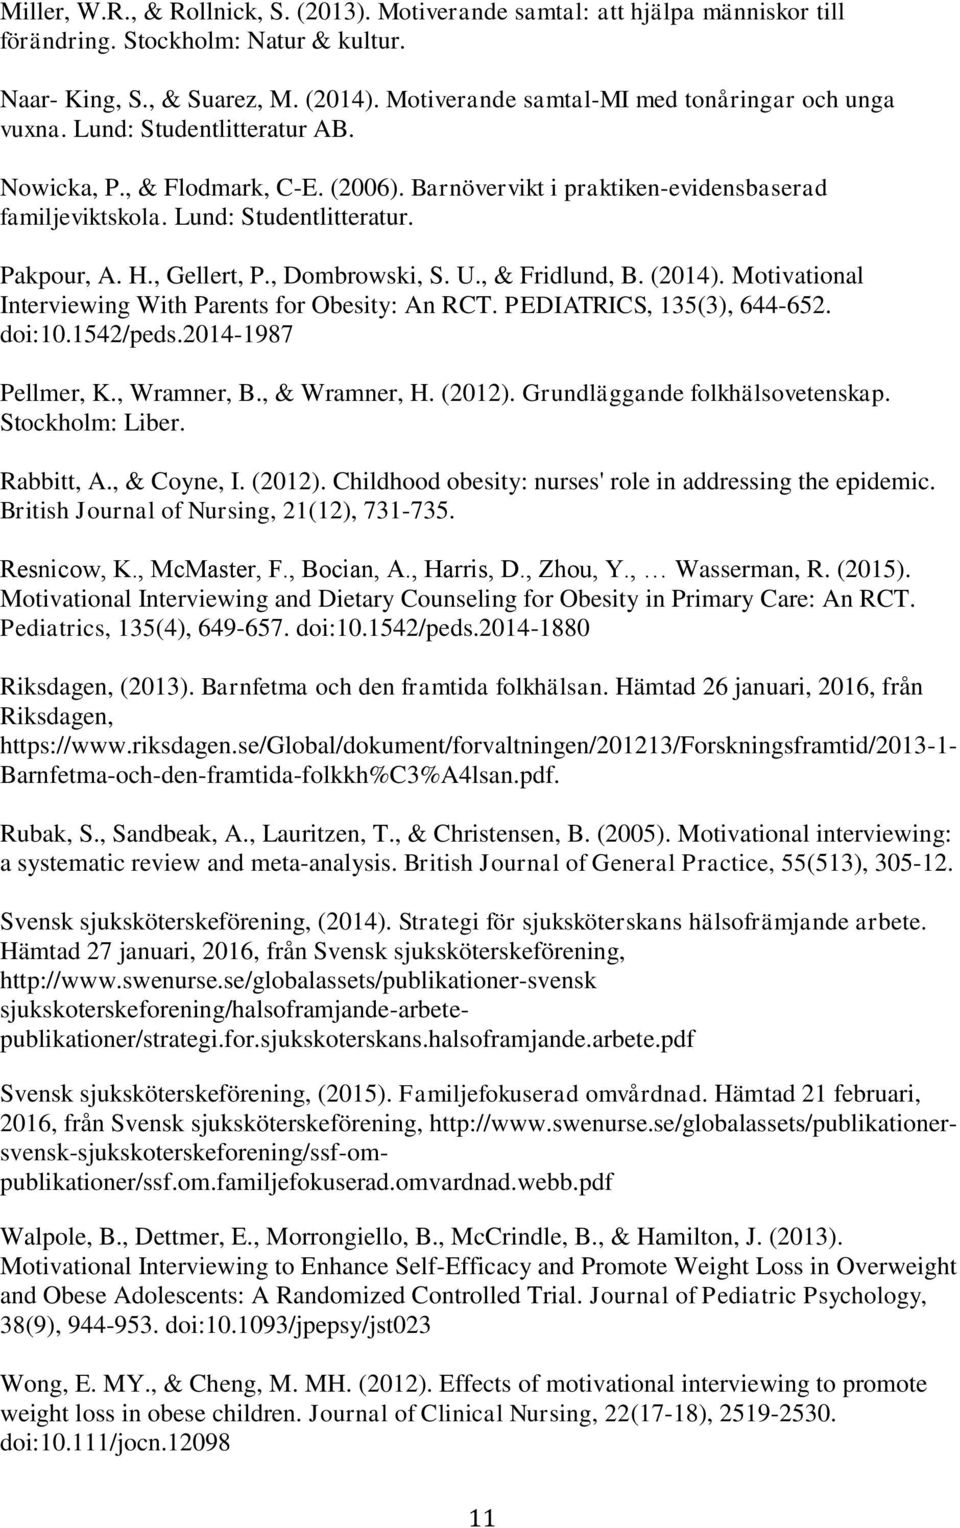 Lund: Studentlitteratur. Pakpour, A. H., Gellert, P., Dombrowski, S. U., & Fridlund, B. (2014). Motivational Interviewing With Parents for Obesity: An RCT. PEDIATRICS, 135(3), 644-652. doi:10.